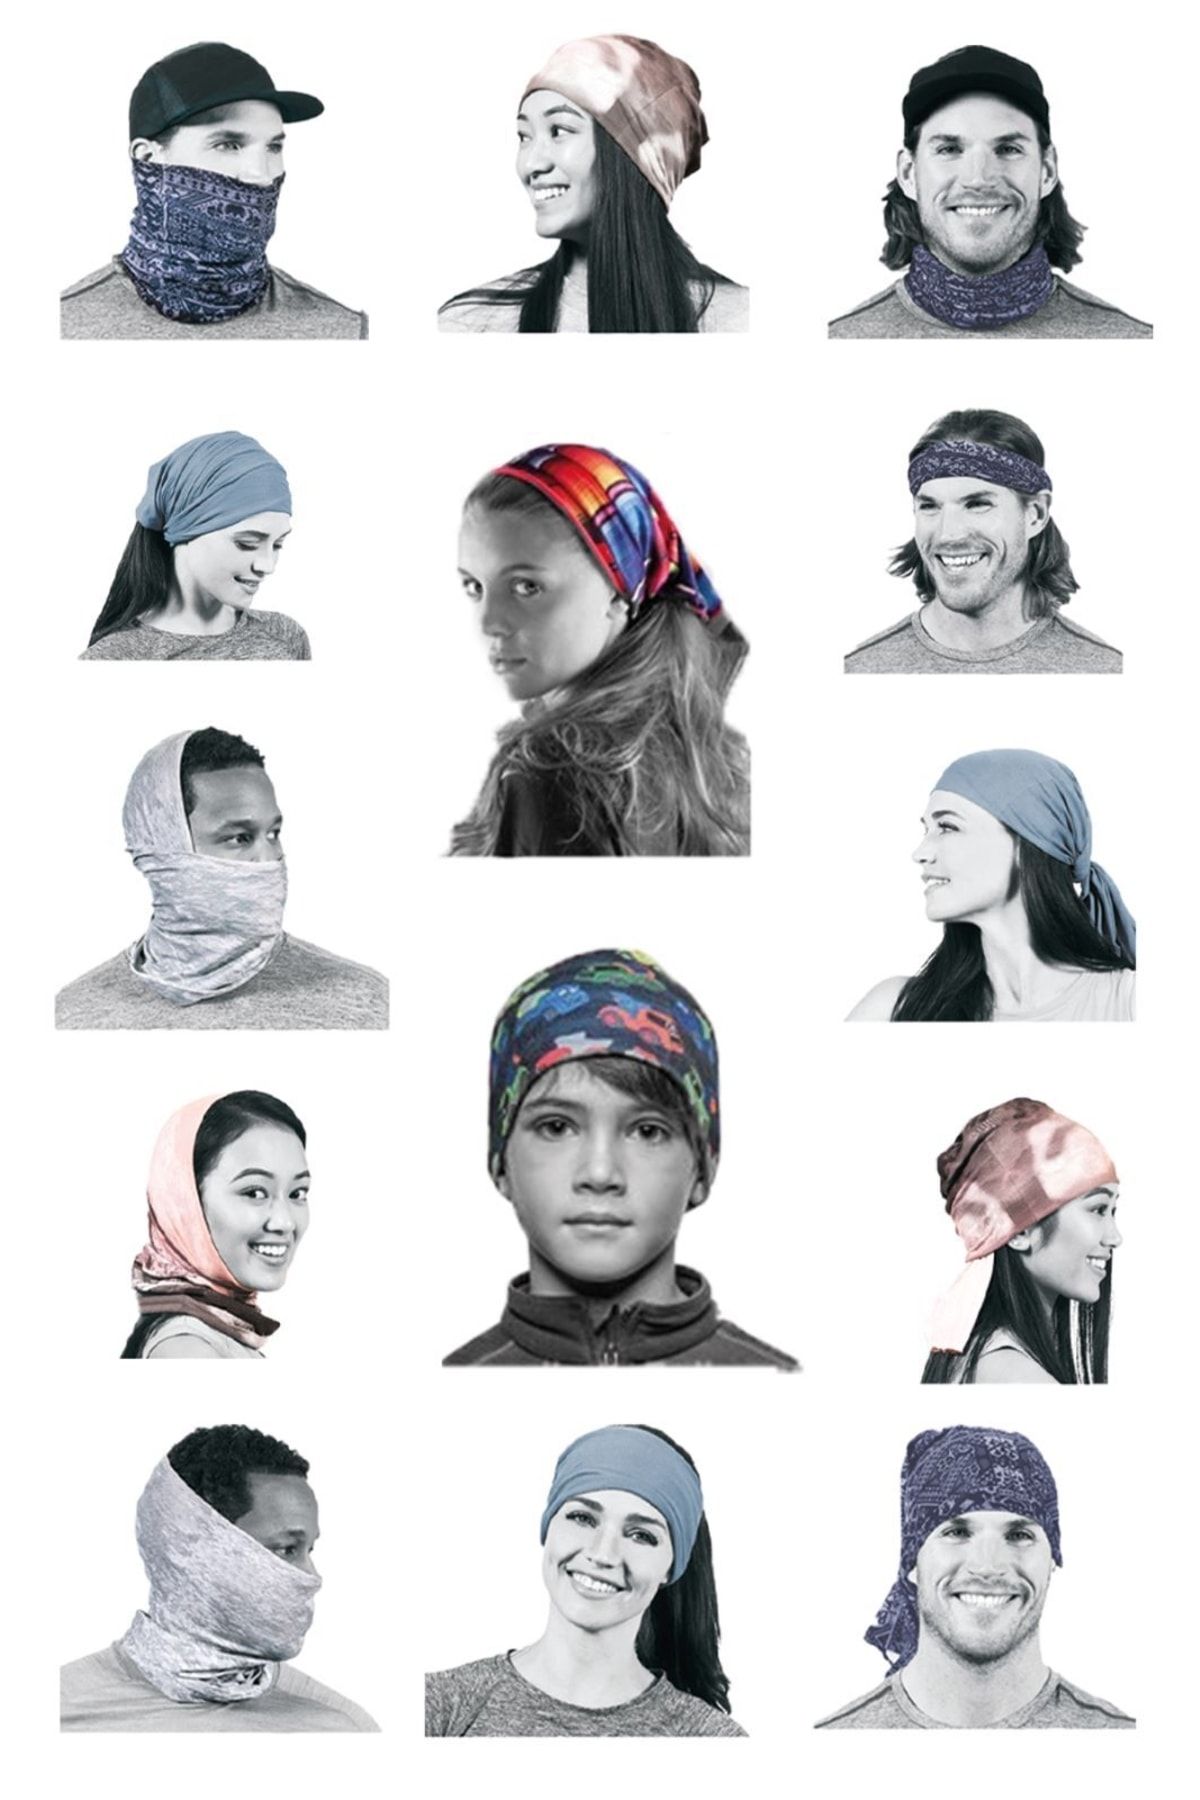 Multifunctional Muslim Headwear: Fashionable Face Mask, Neck